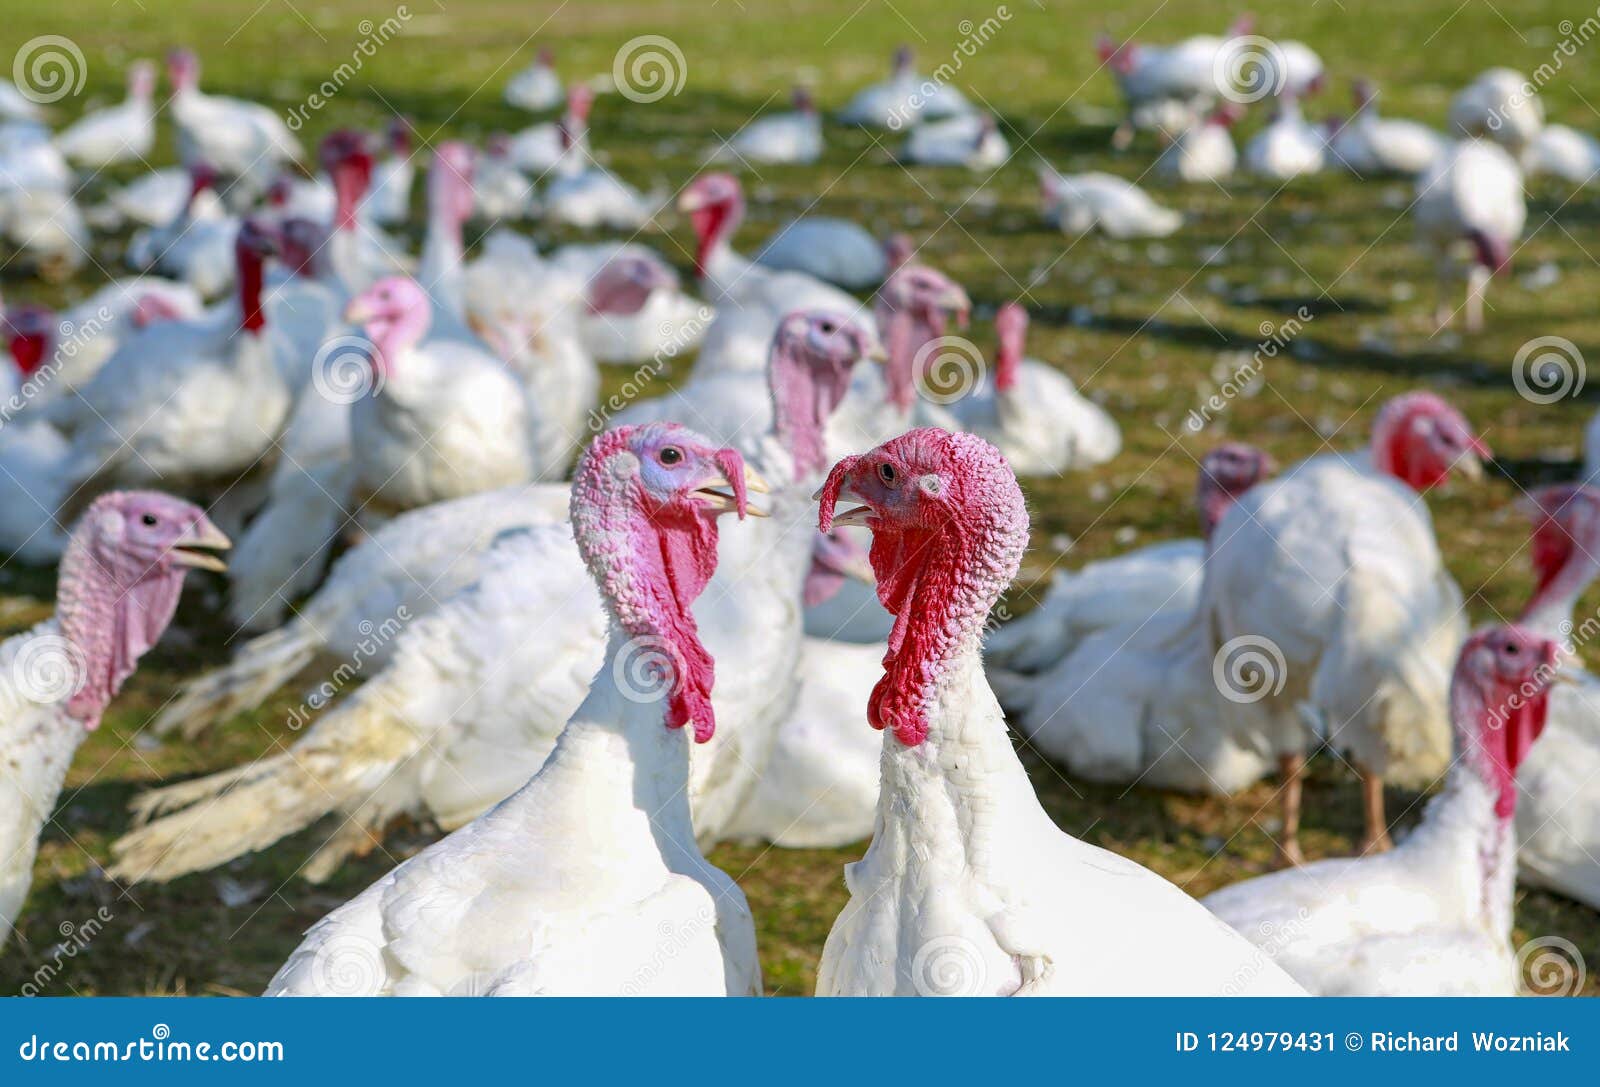 white turkeys